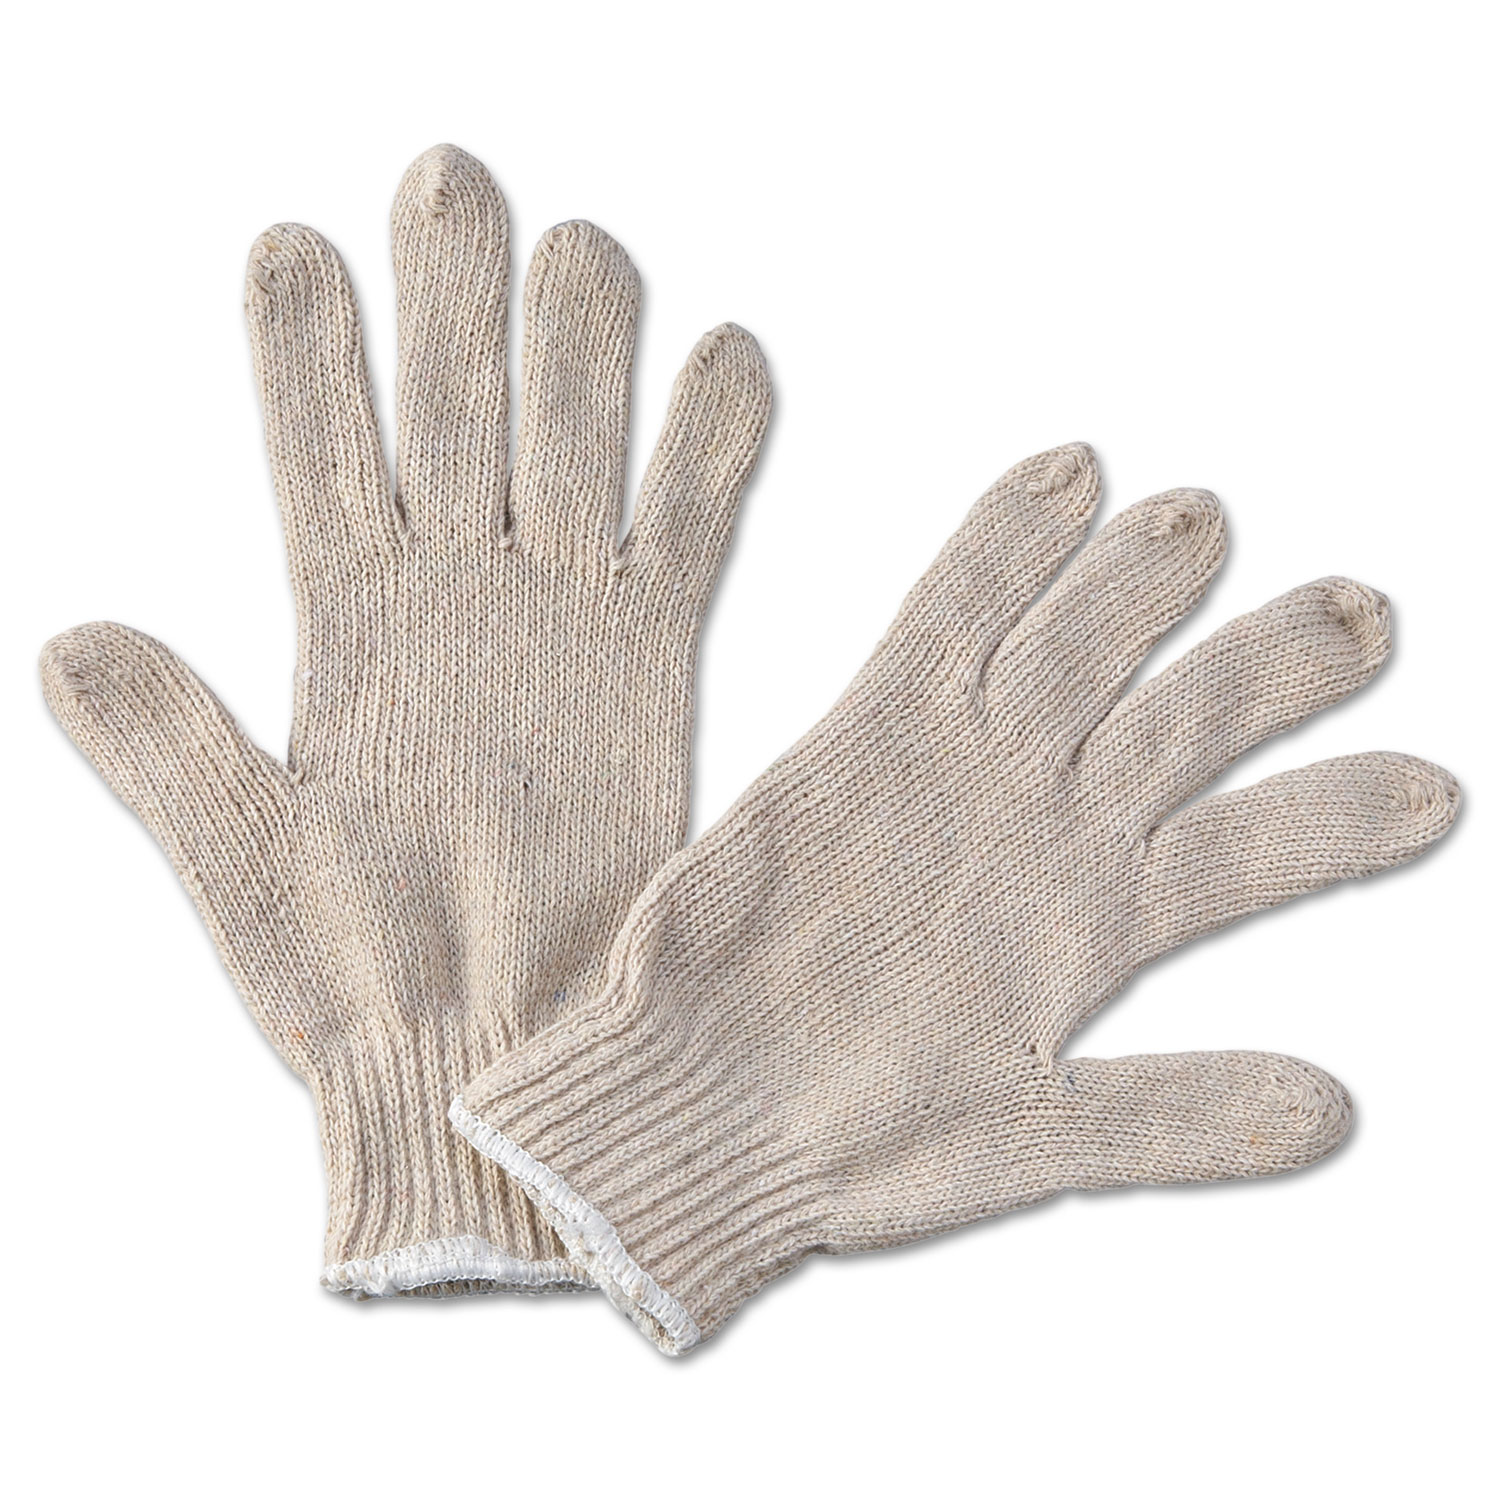 String Knit General Purpose Gloves, Large, Natural, 12 Pairs